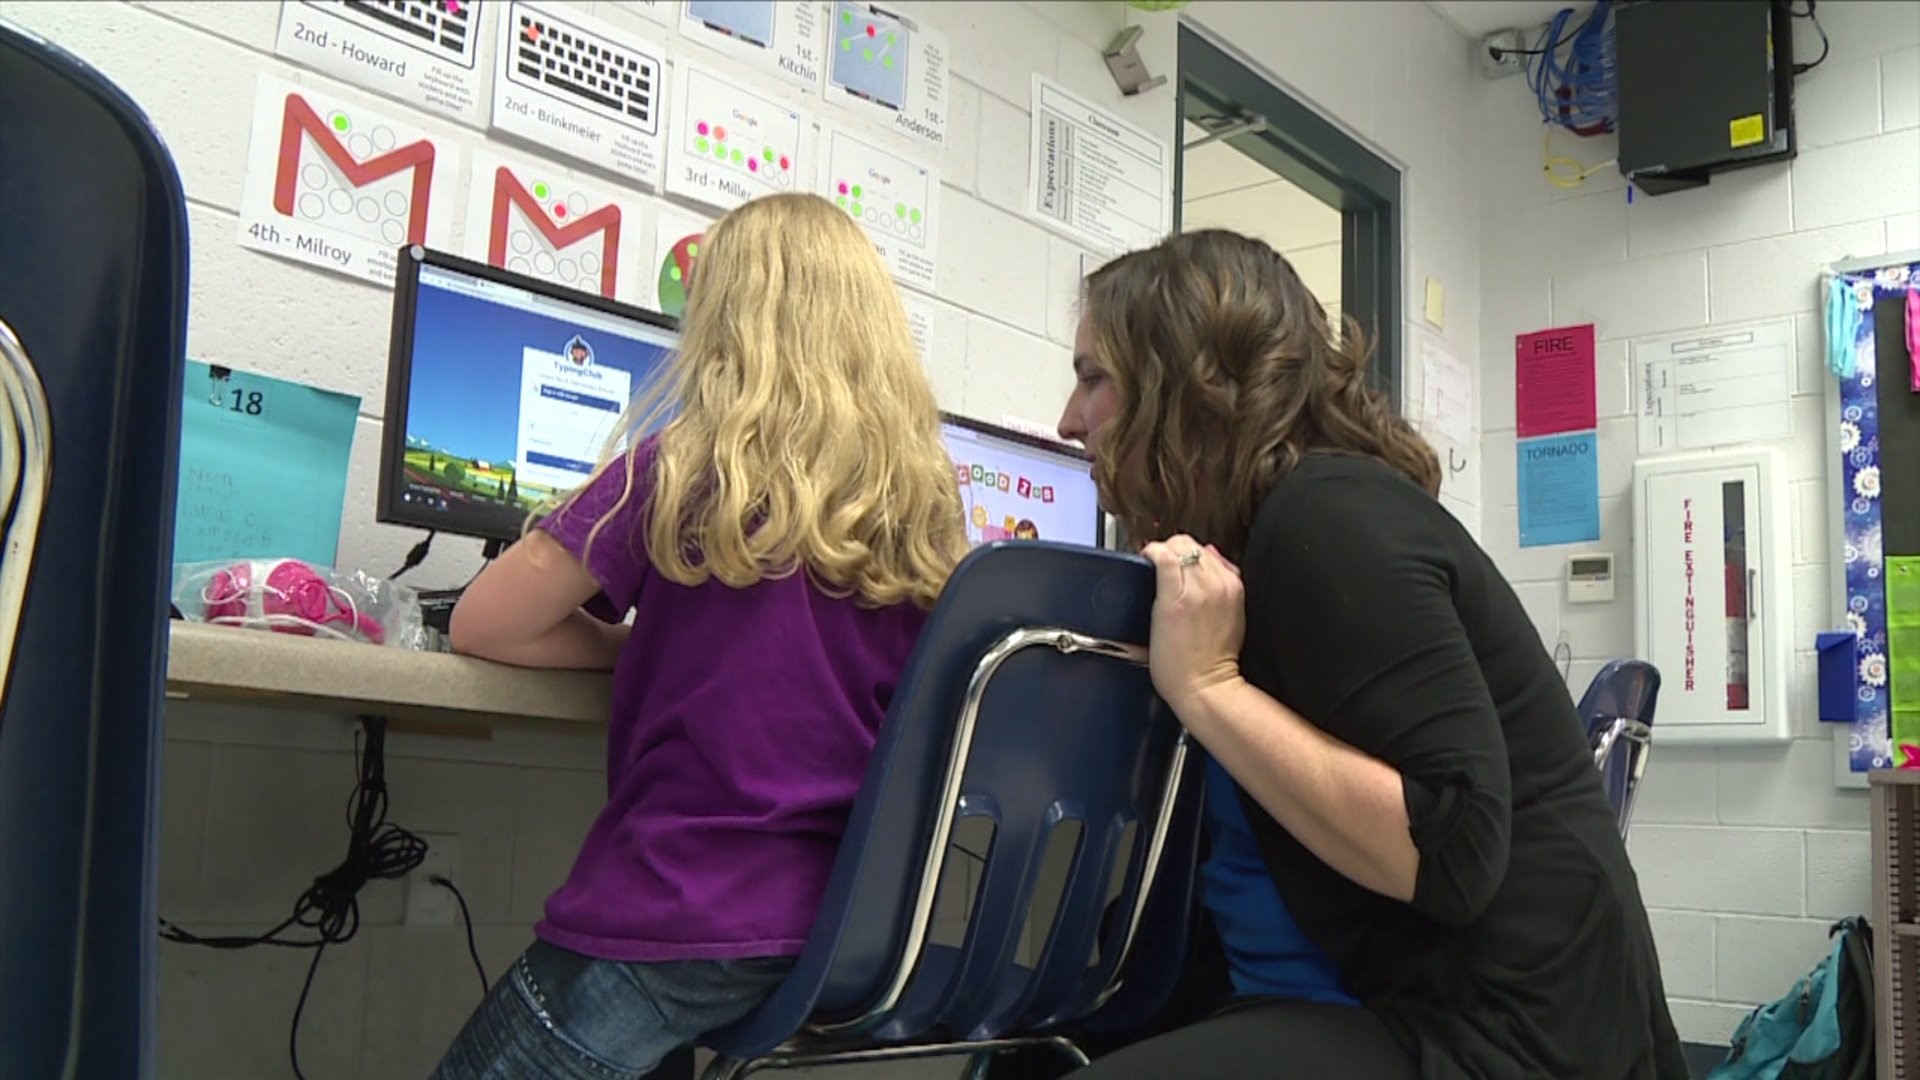 Rural Illinois teacher focuses on putting tech in the classroom